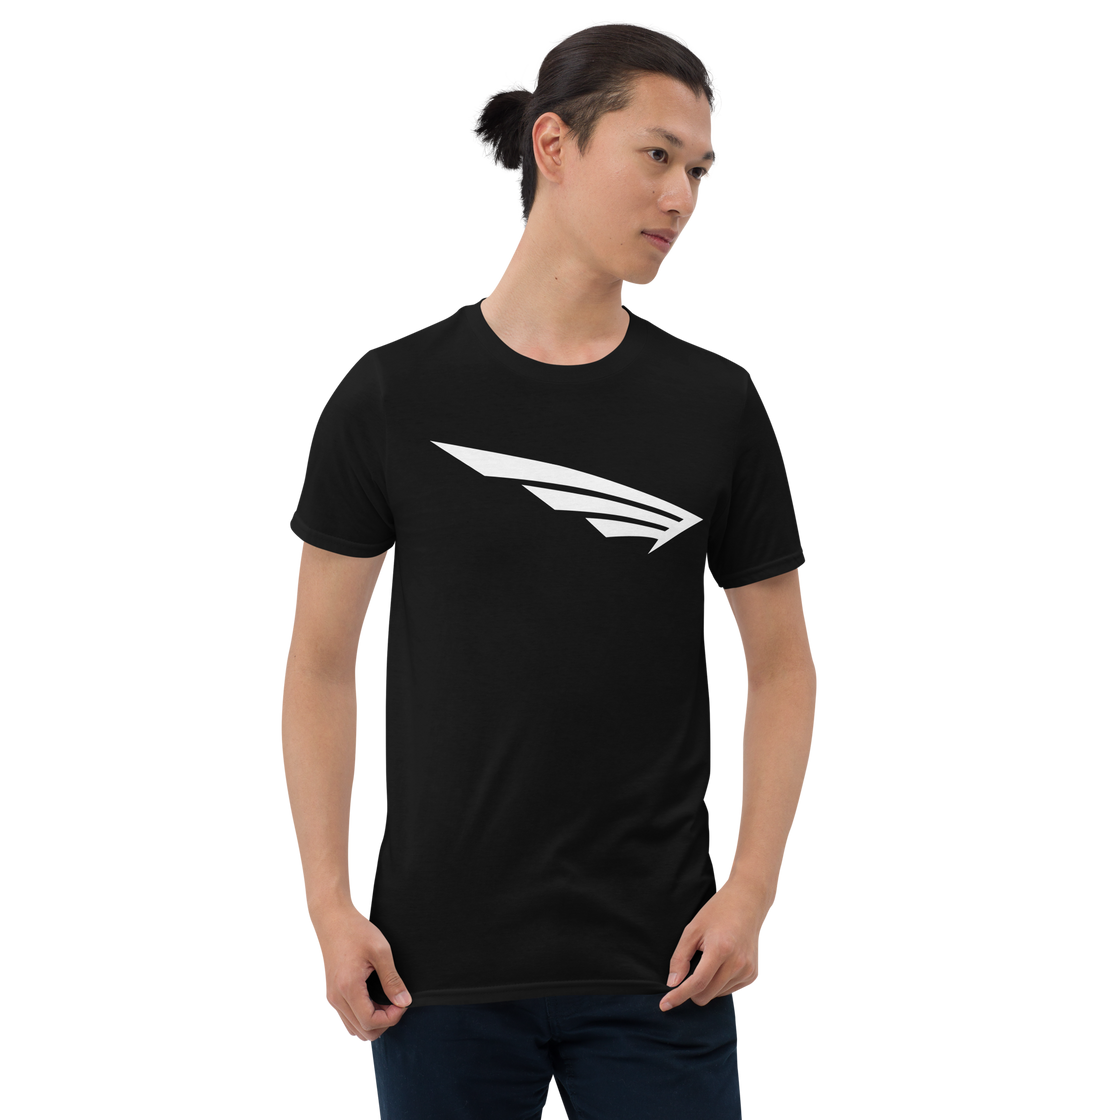 FLY³ Original Wing T-Shirt | Flycube